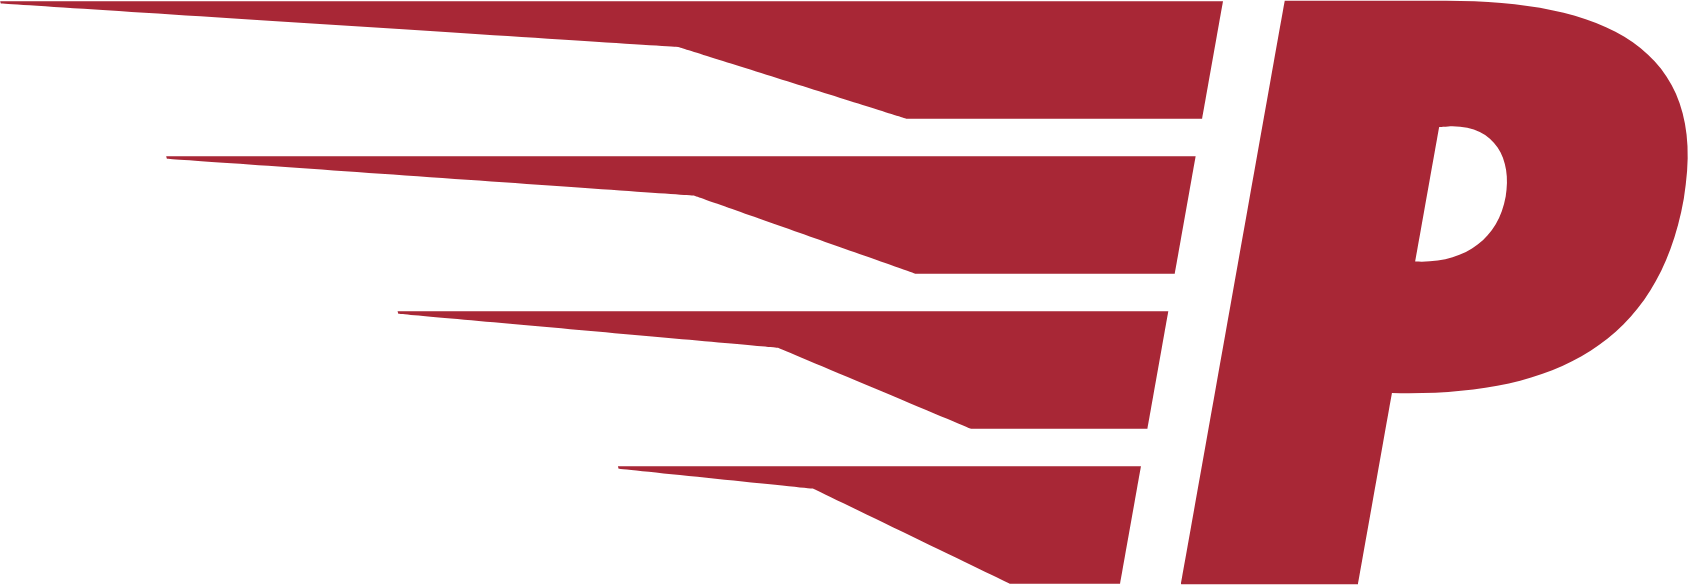 Performance Food Group logo (PNG transparent)